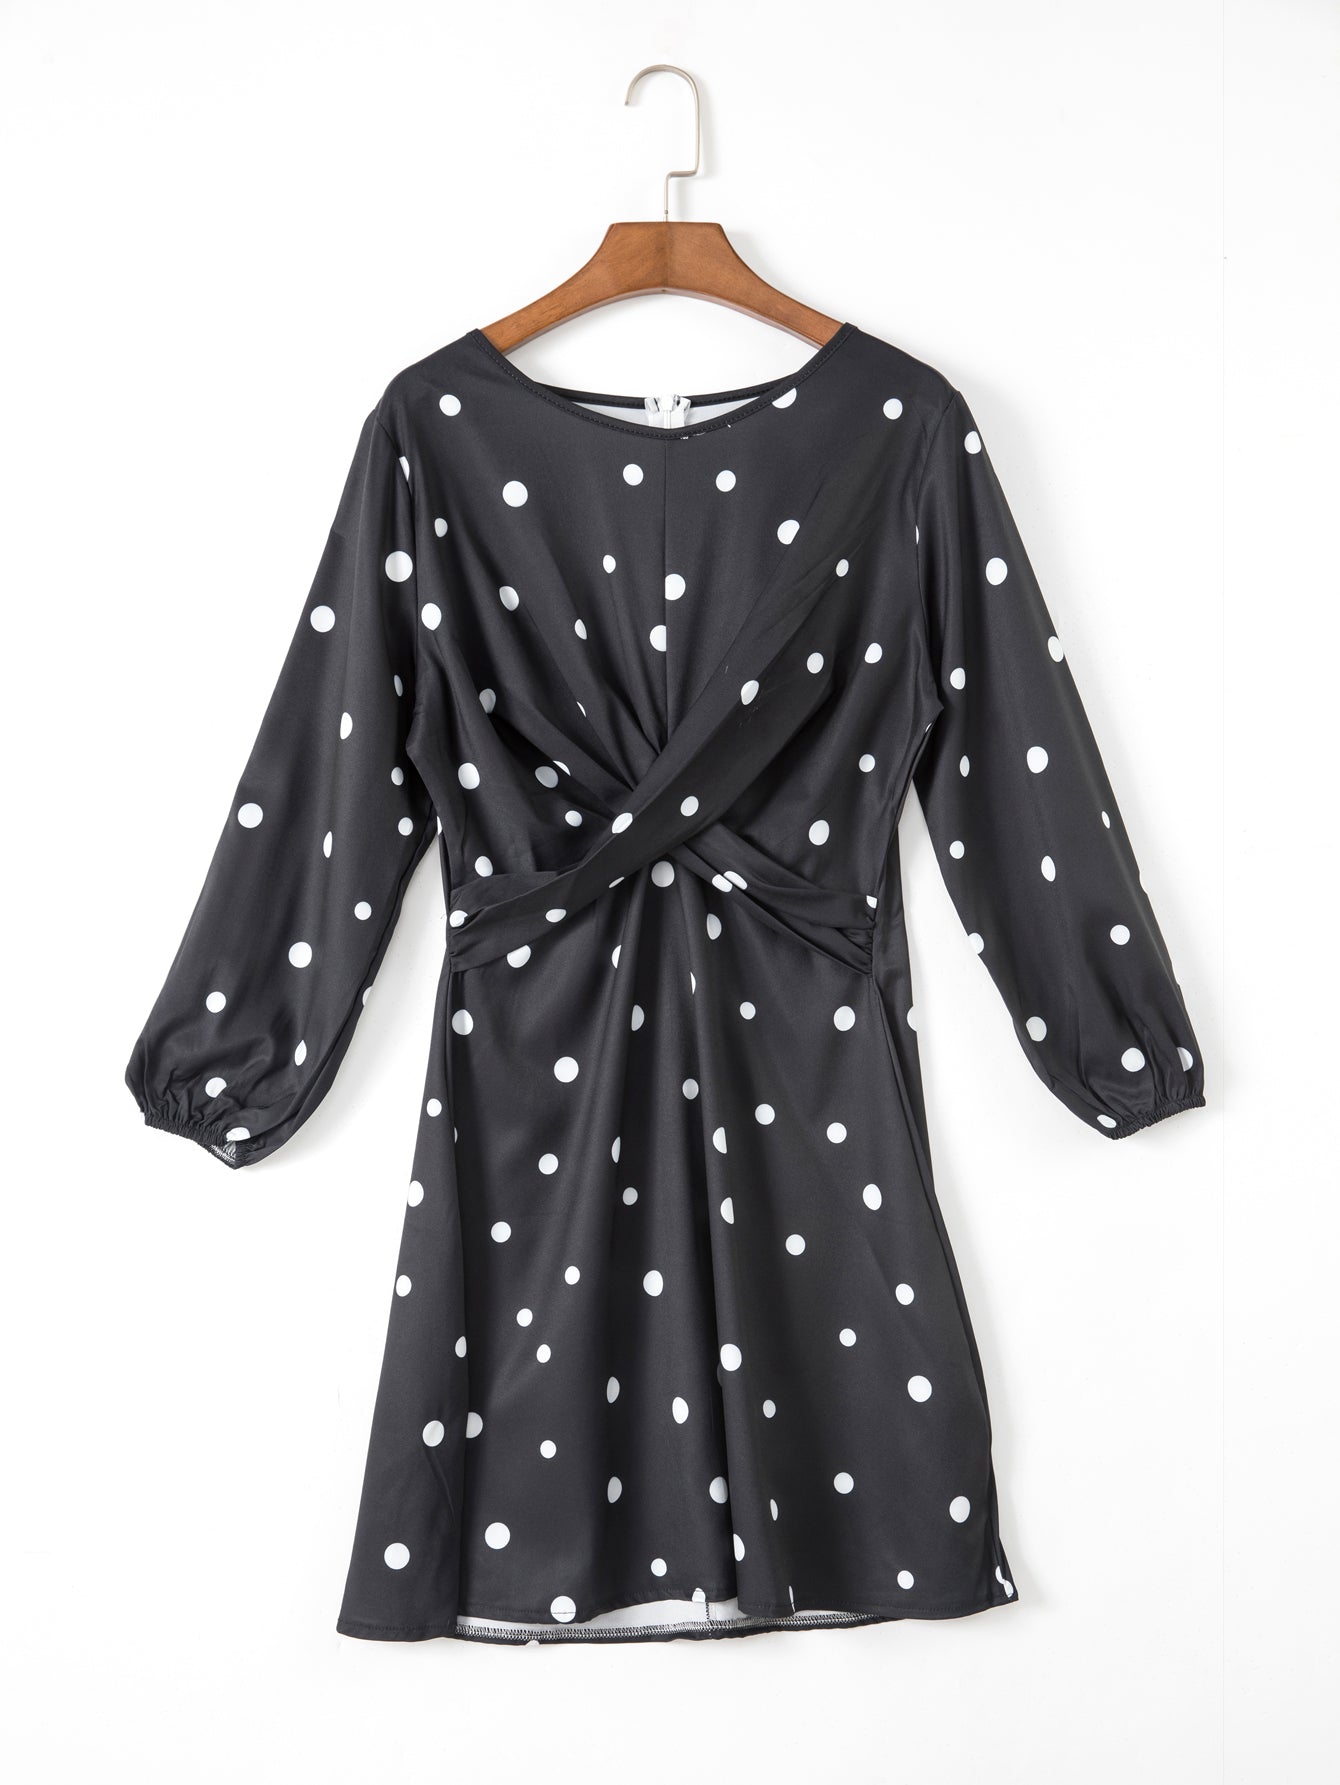 Fashion polka dot print long sleeve hot style dress Sai Feel